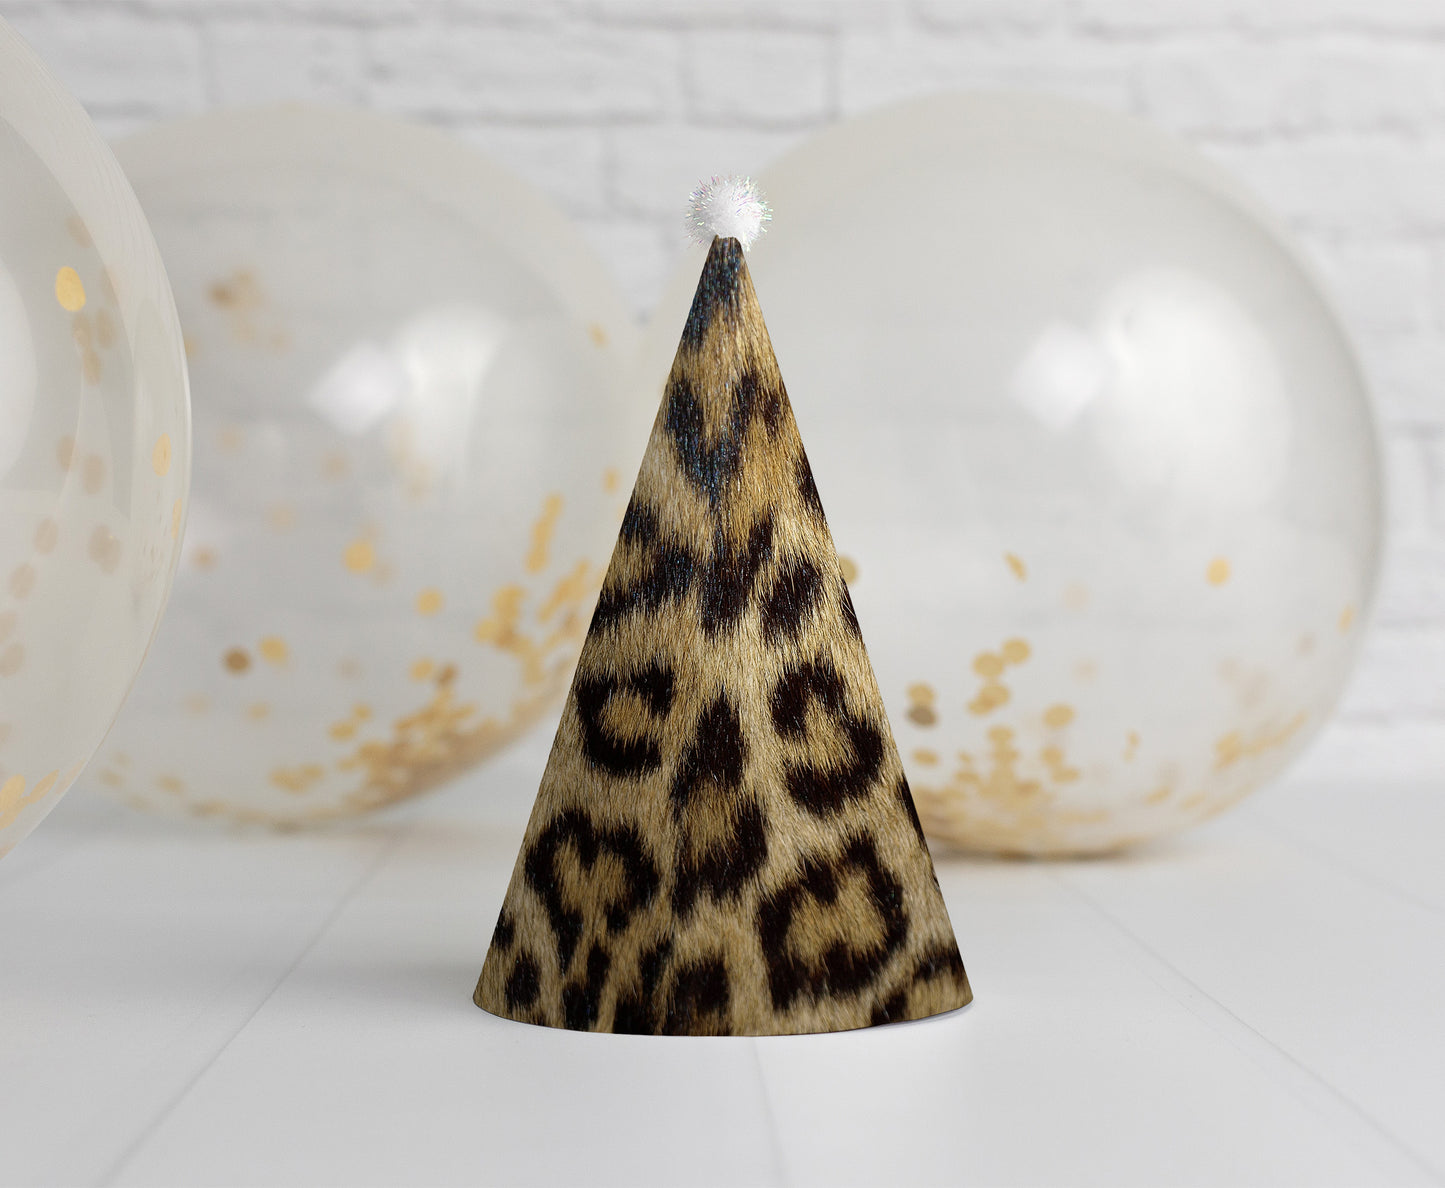 Animal print Party Hats | Safari Themed Birthday Party Decorations - 35H